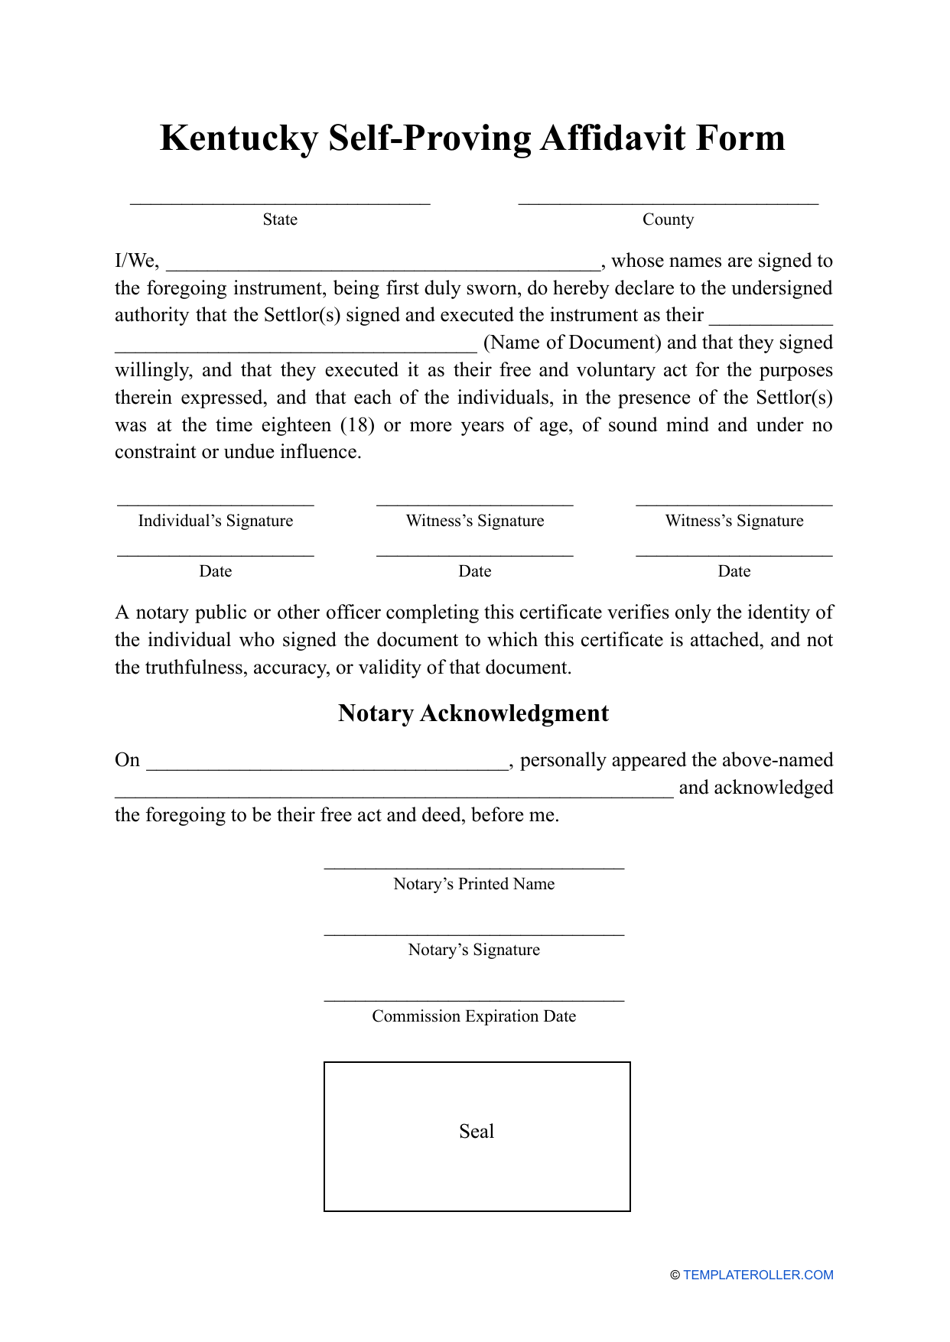 Self-proving Affidavit Form - Kentucky, Page 1